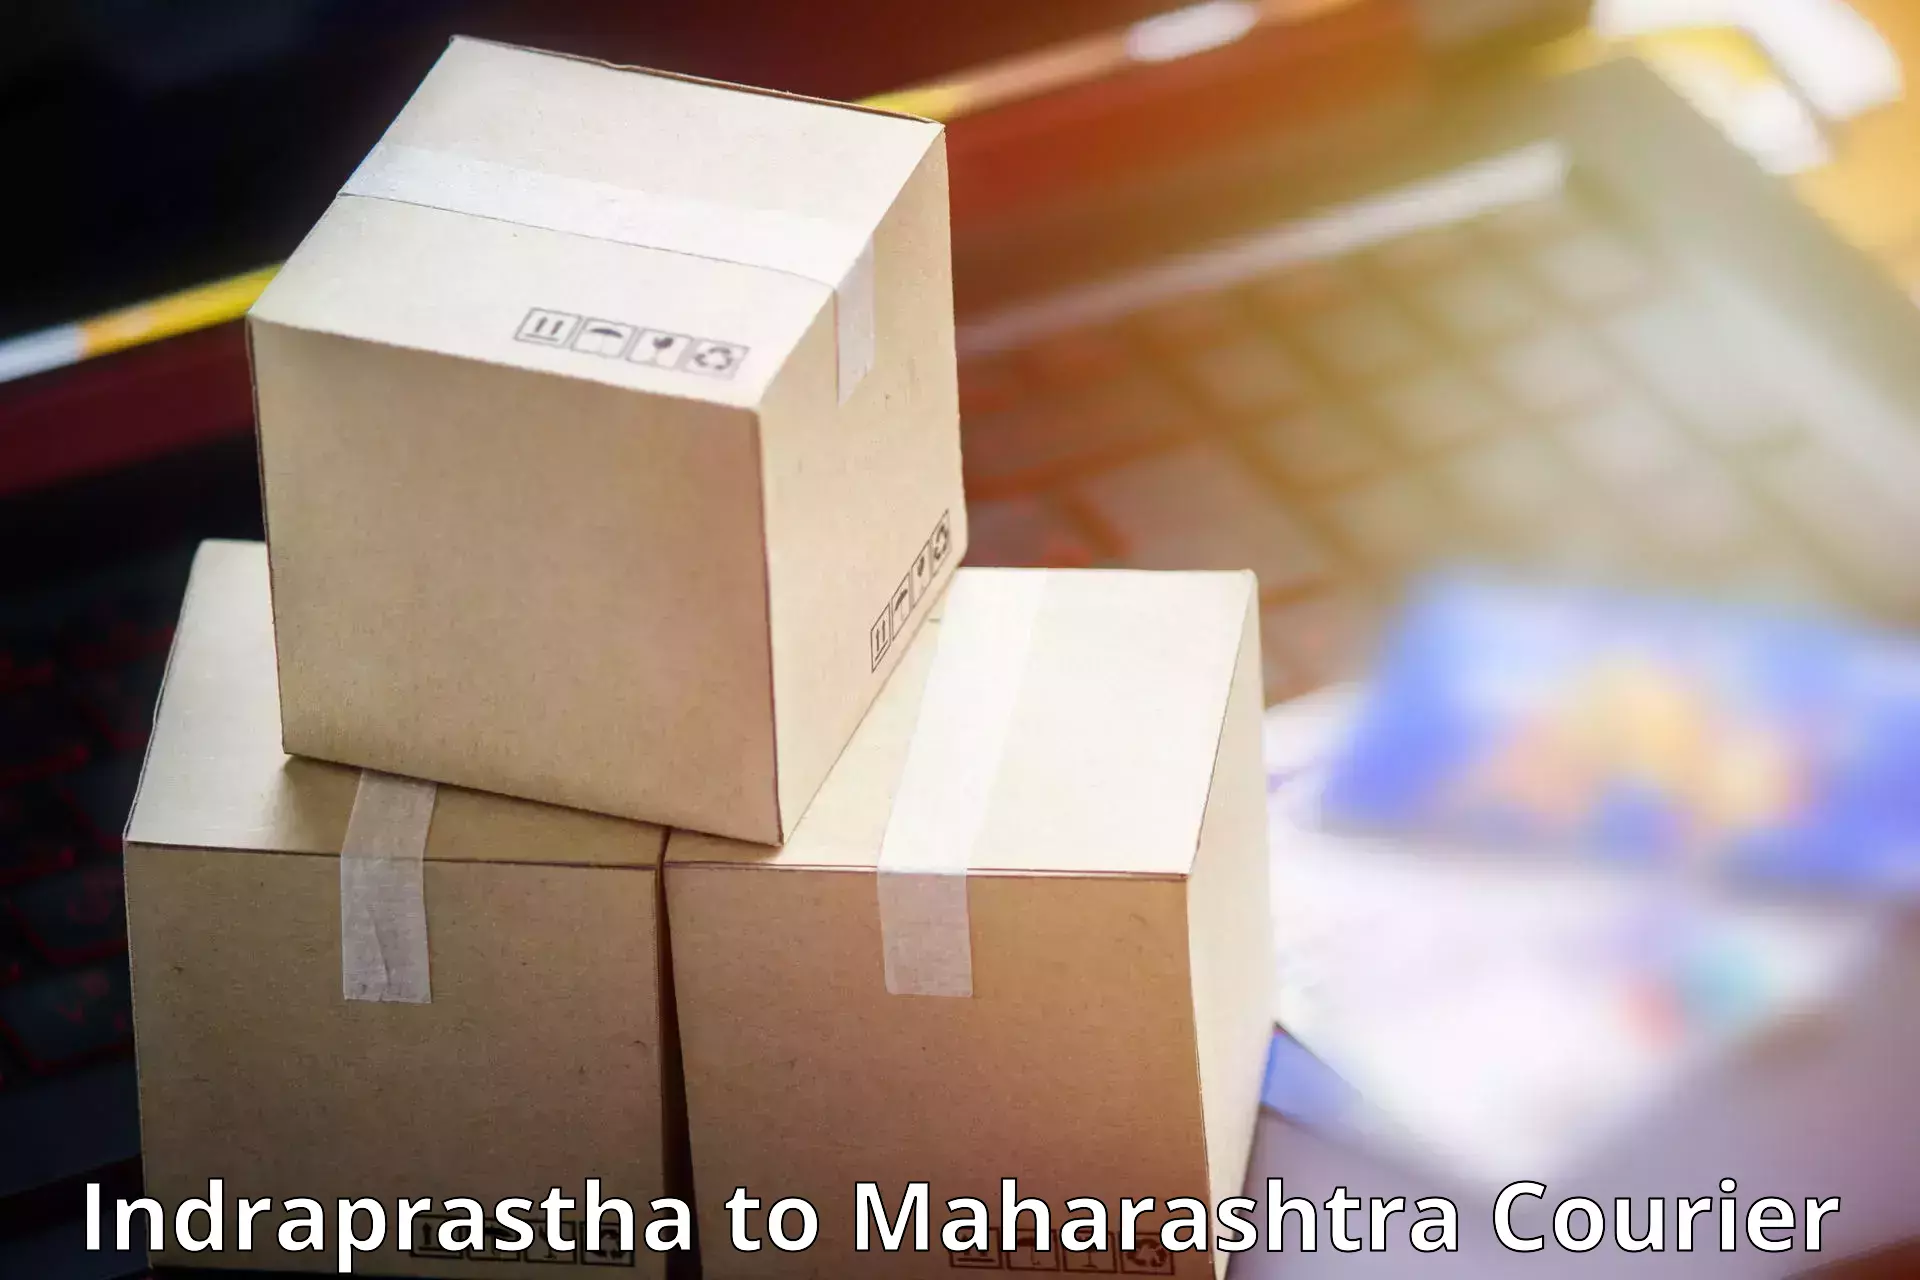 Courier service comparison Indraprastha to Khopoli